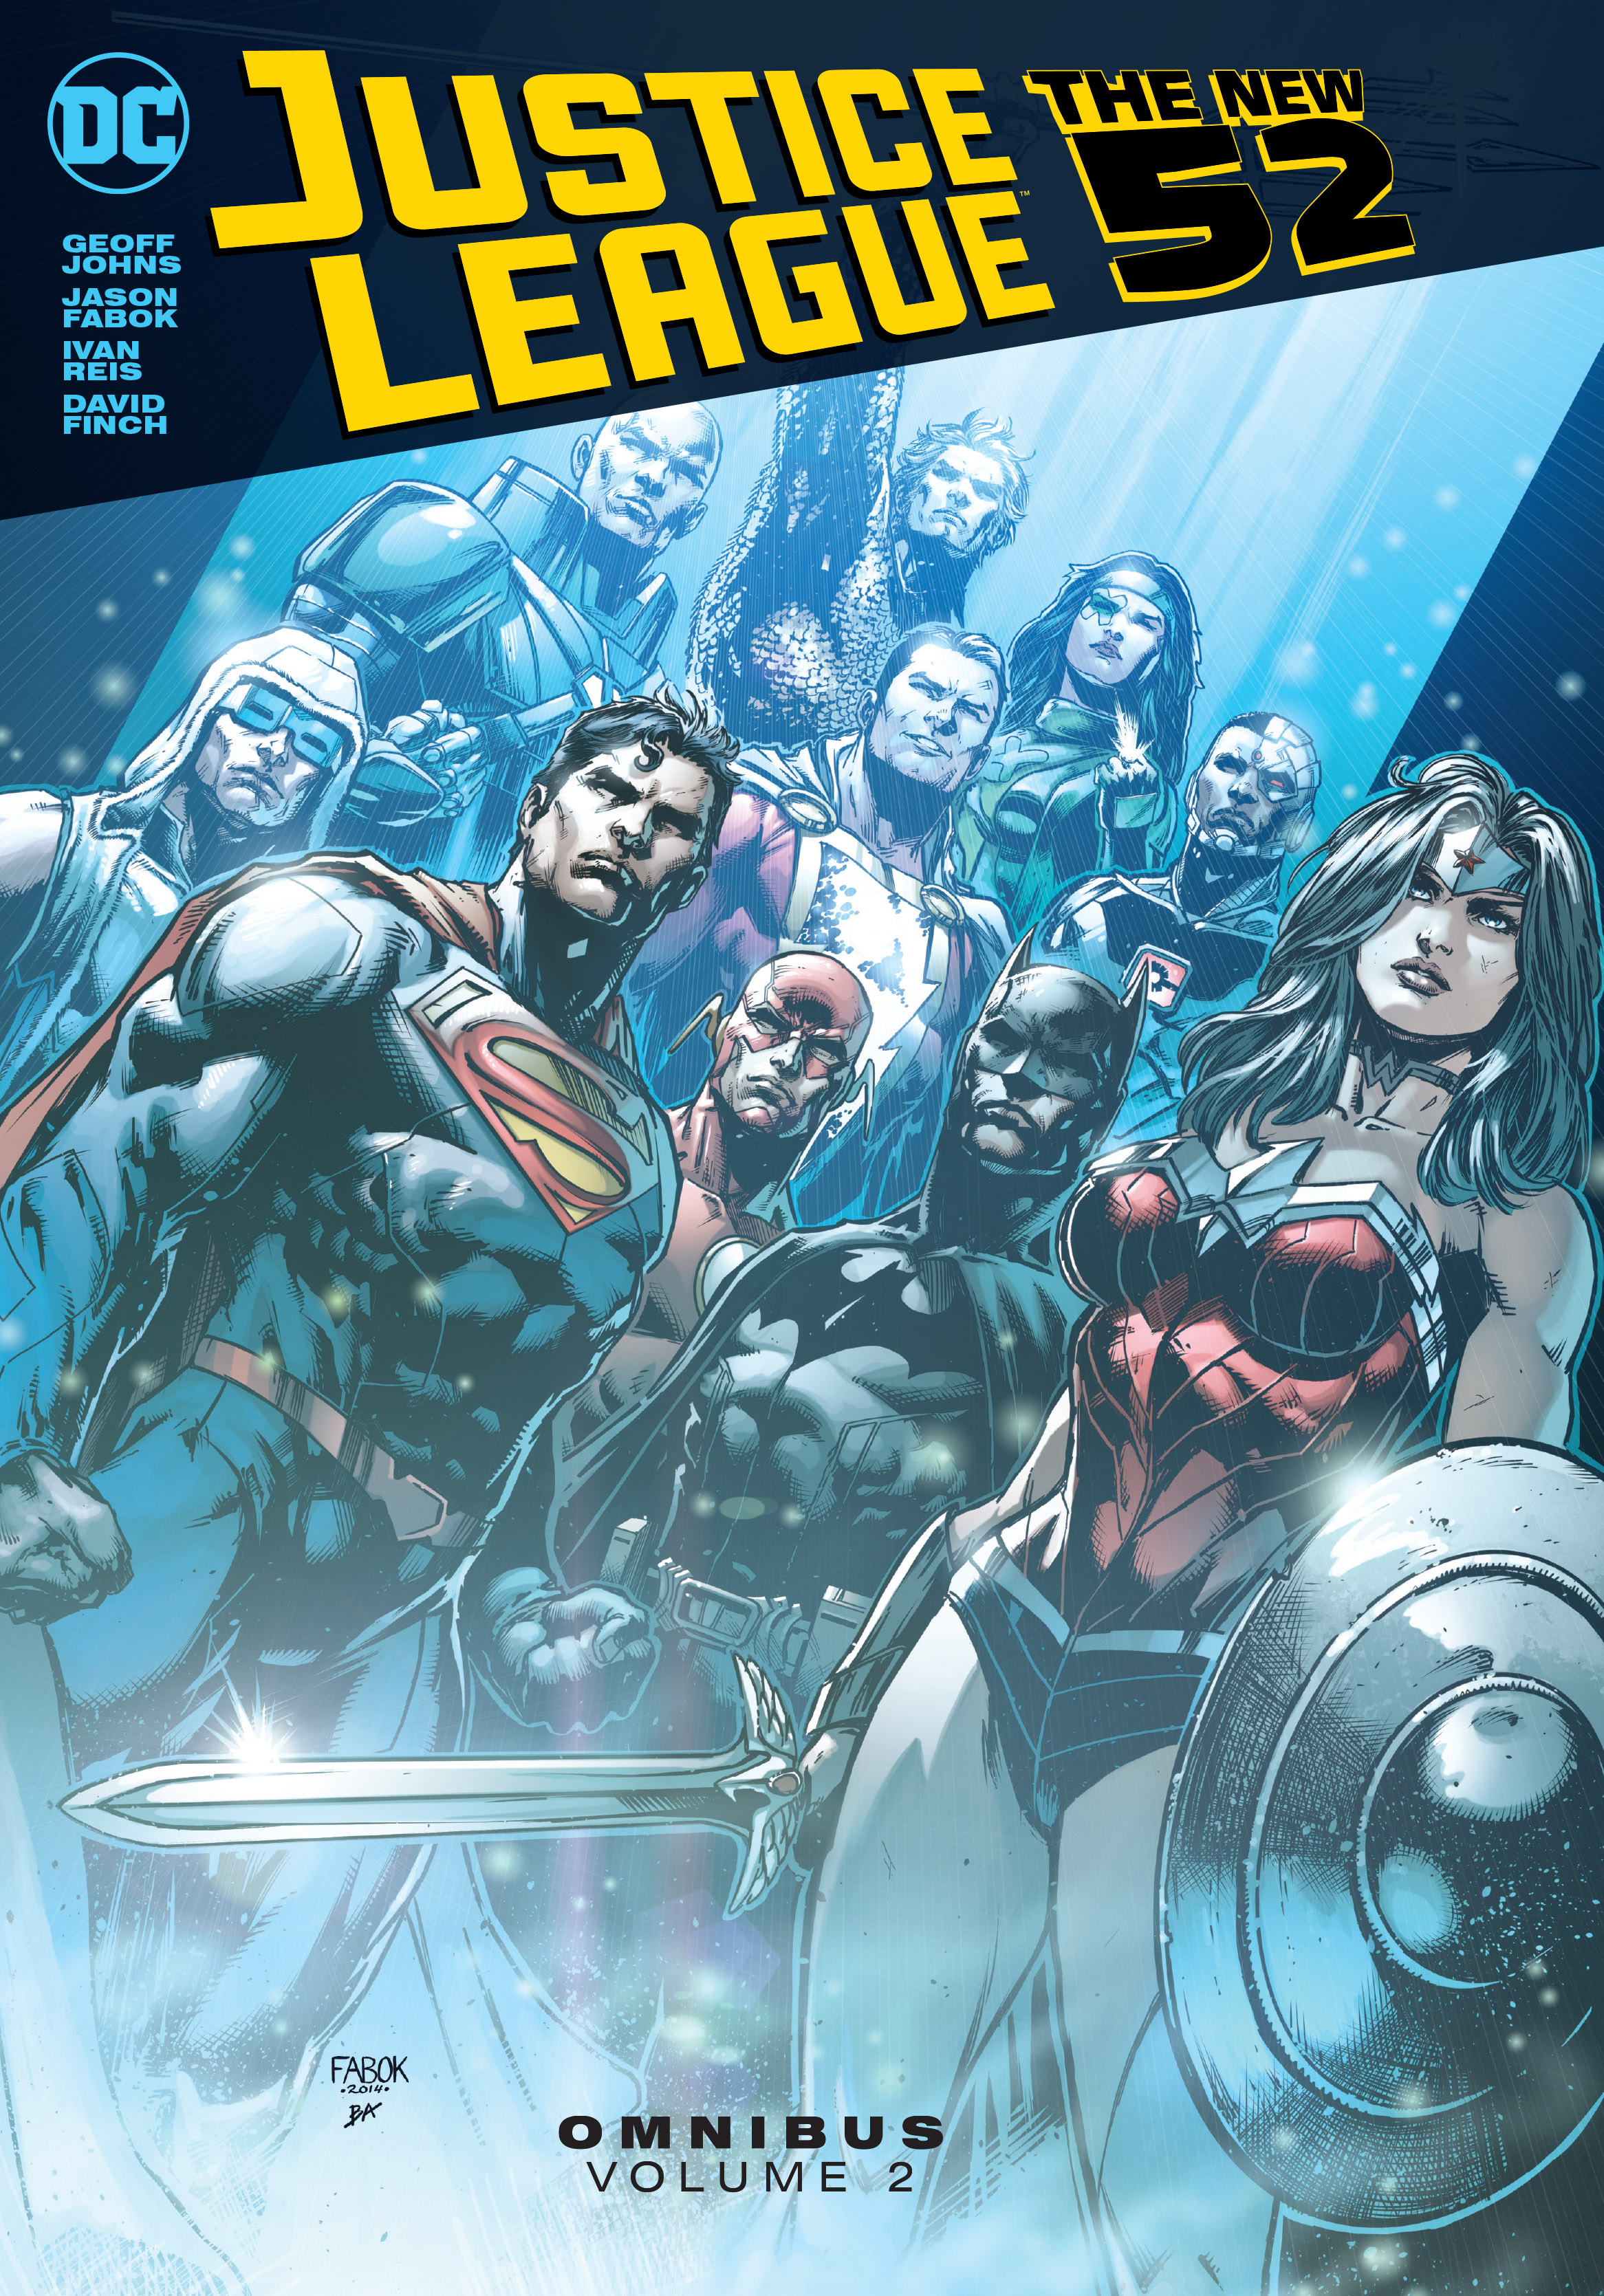 Justice League The New 52 Omnibus Hardcover Volume 2